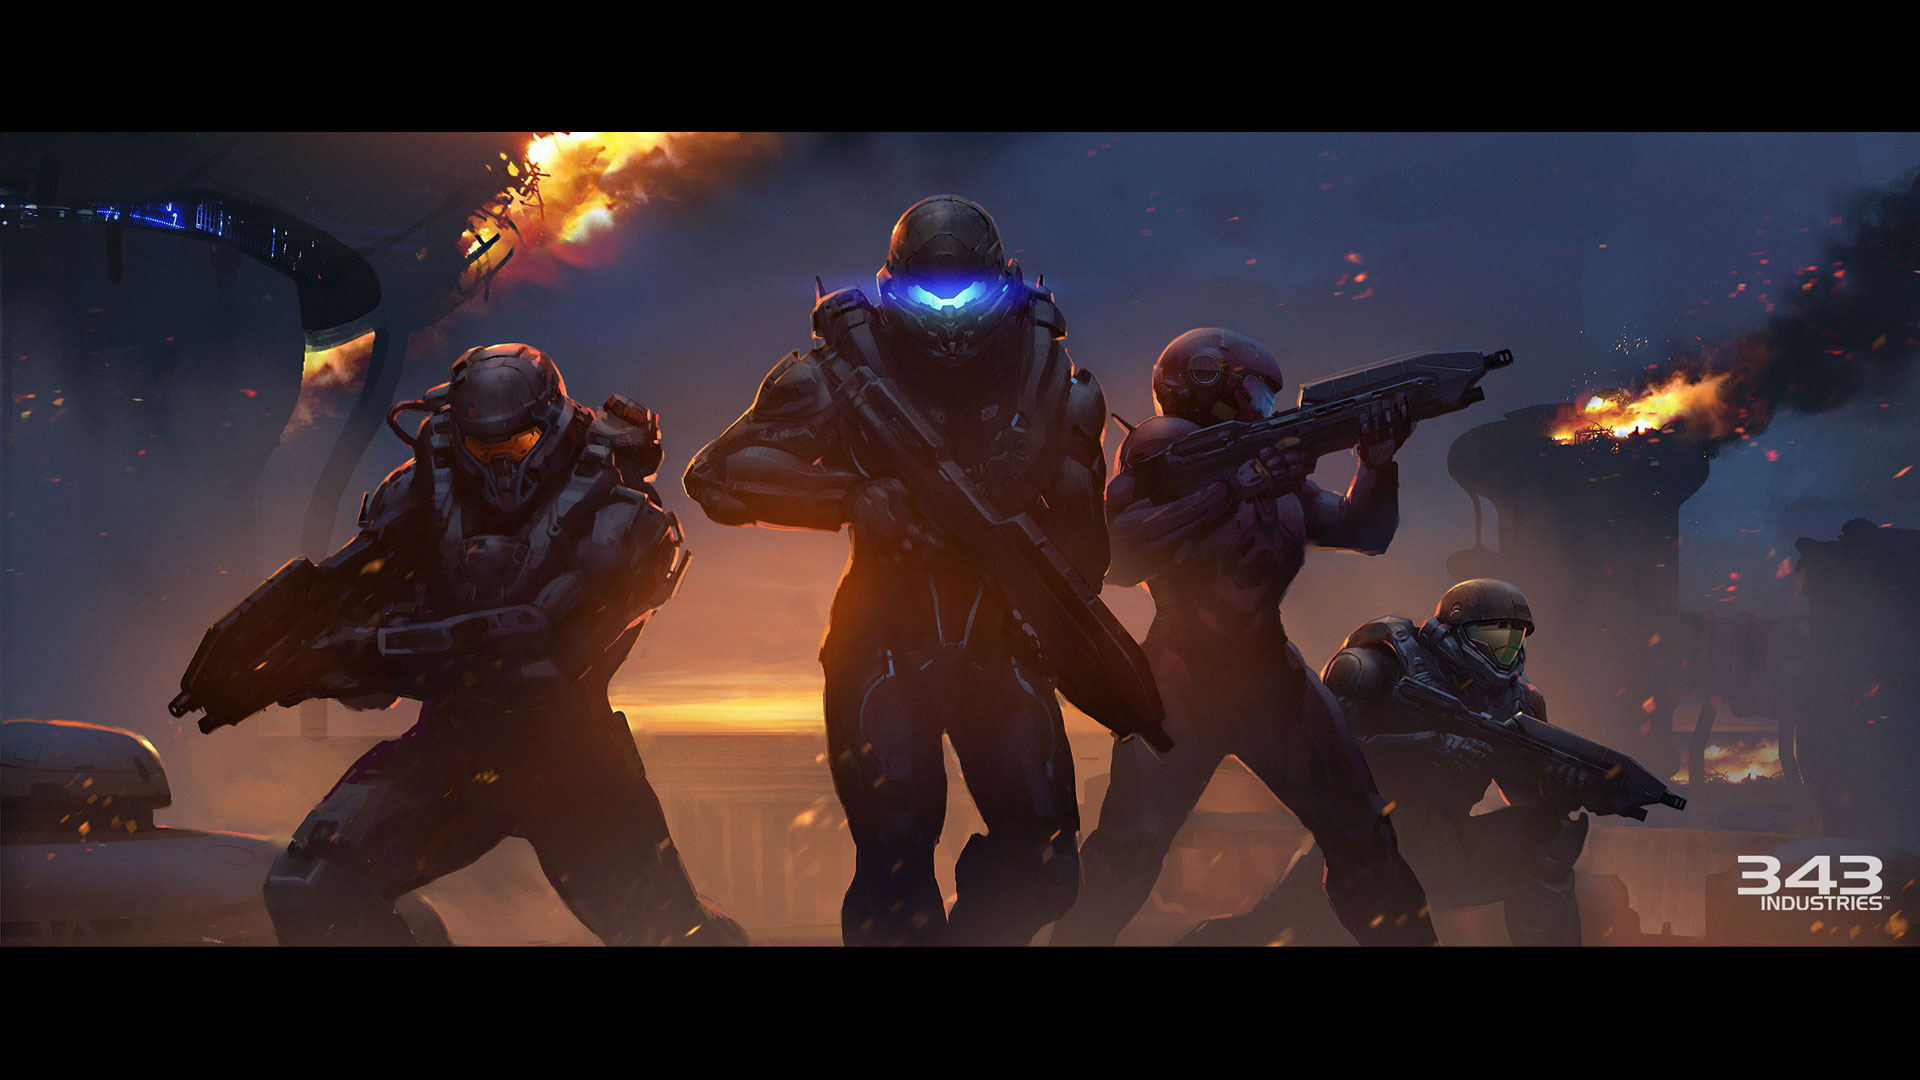 h5-guardians-concept-campaign-battle-of-sunaion-firestorm-88d66797d7b94a848e5b2162d5bc971a.jpg